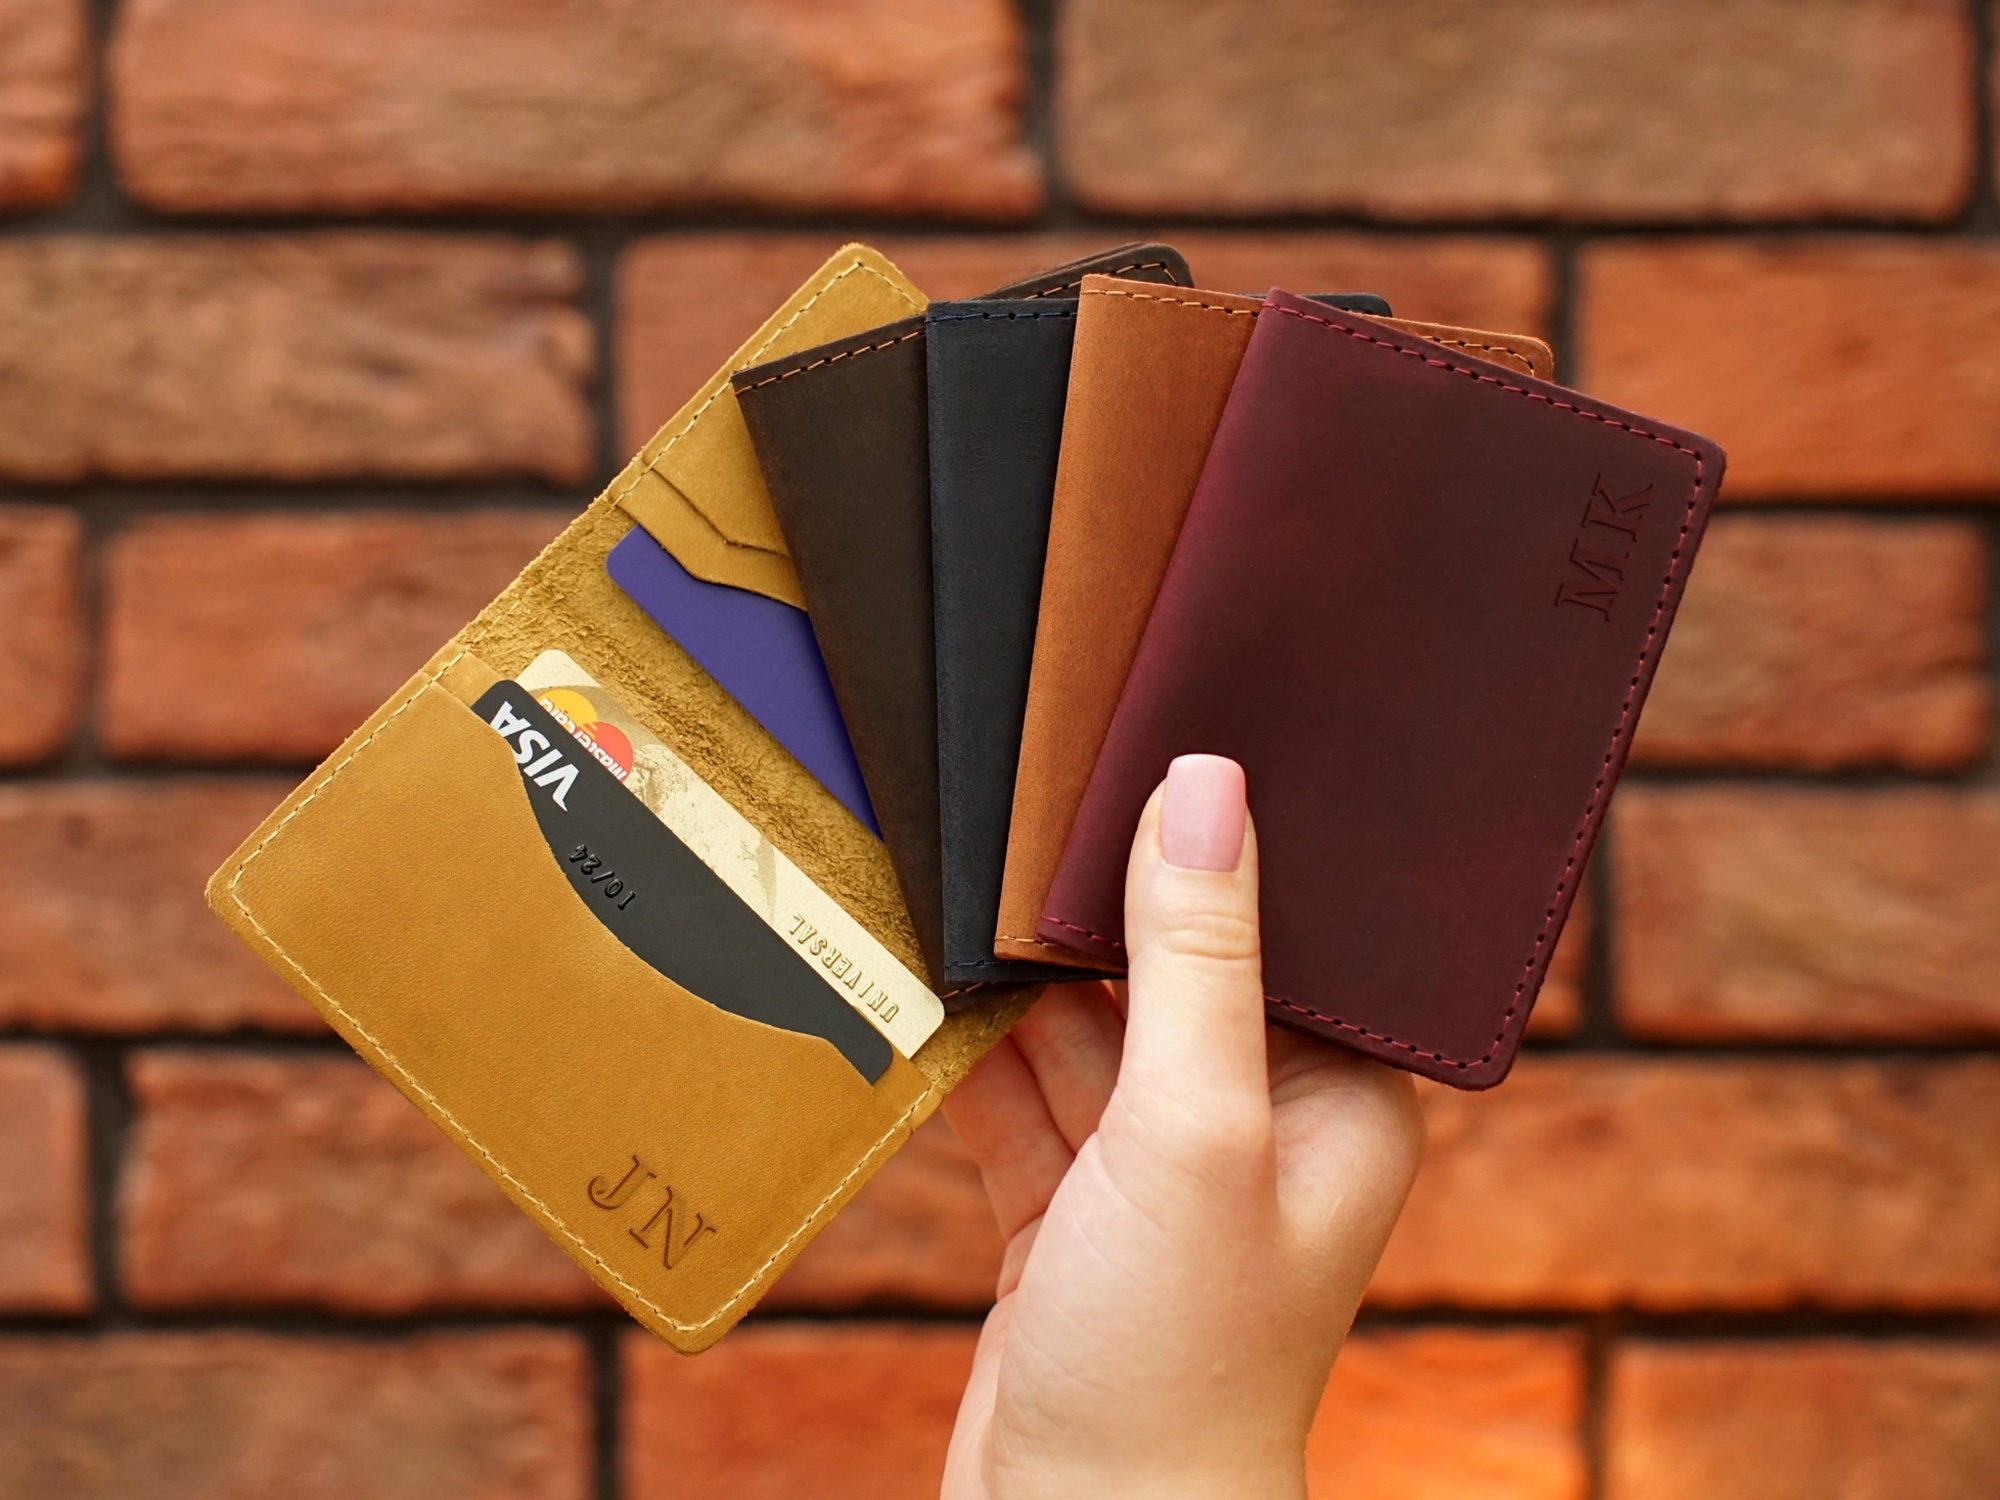 Brown Leather Envelope Business Card Holder